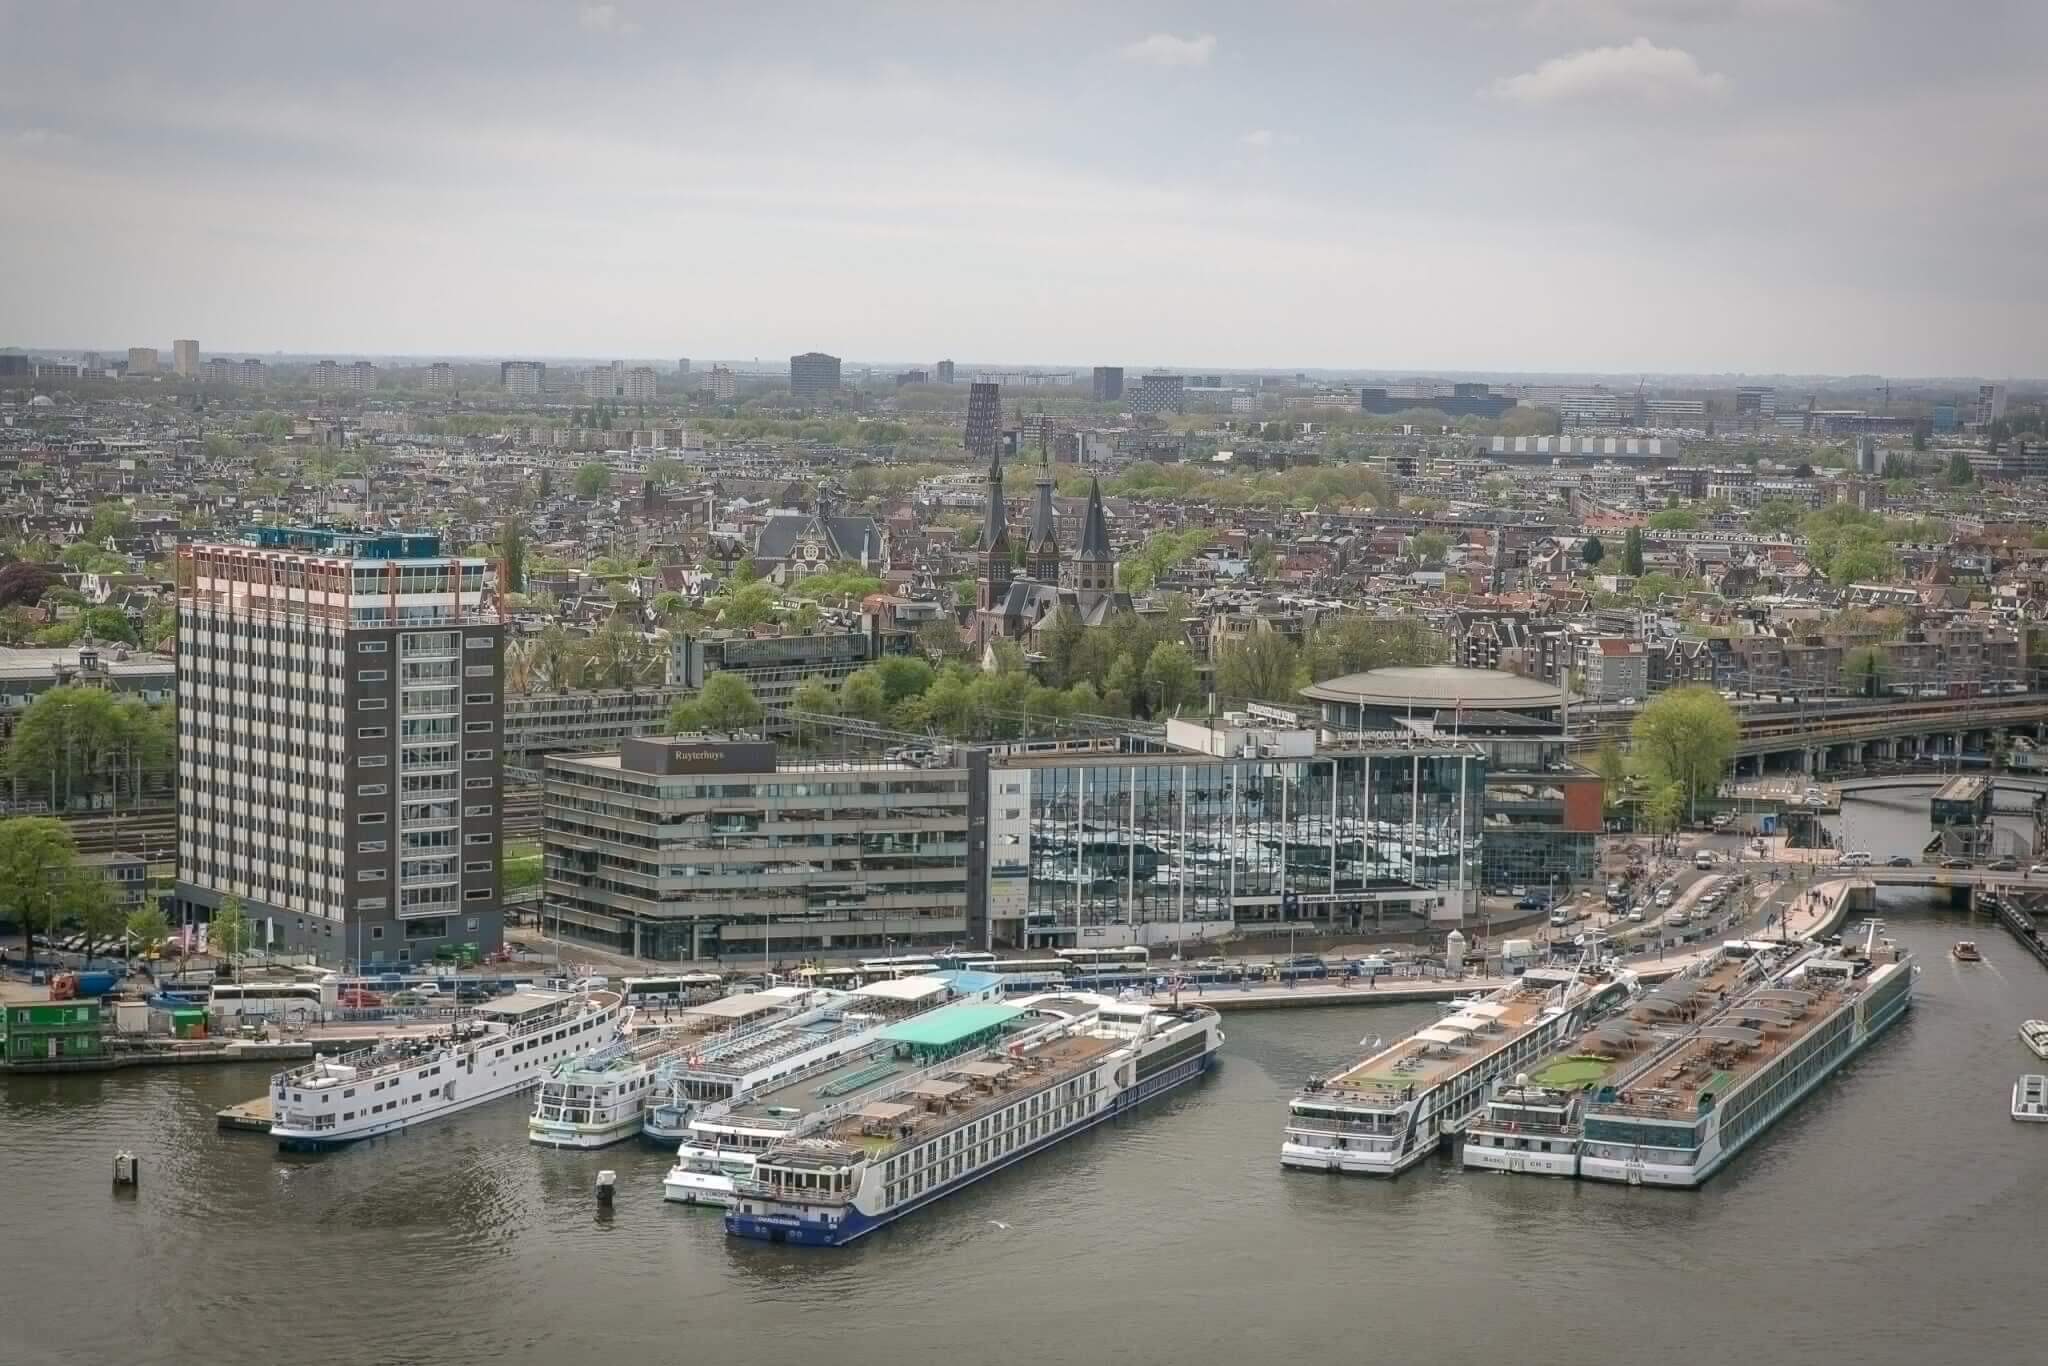 cruise port amsterdam riviercruise en zee cruise foto's